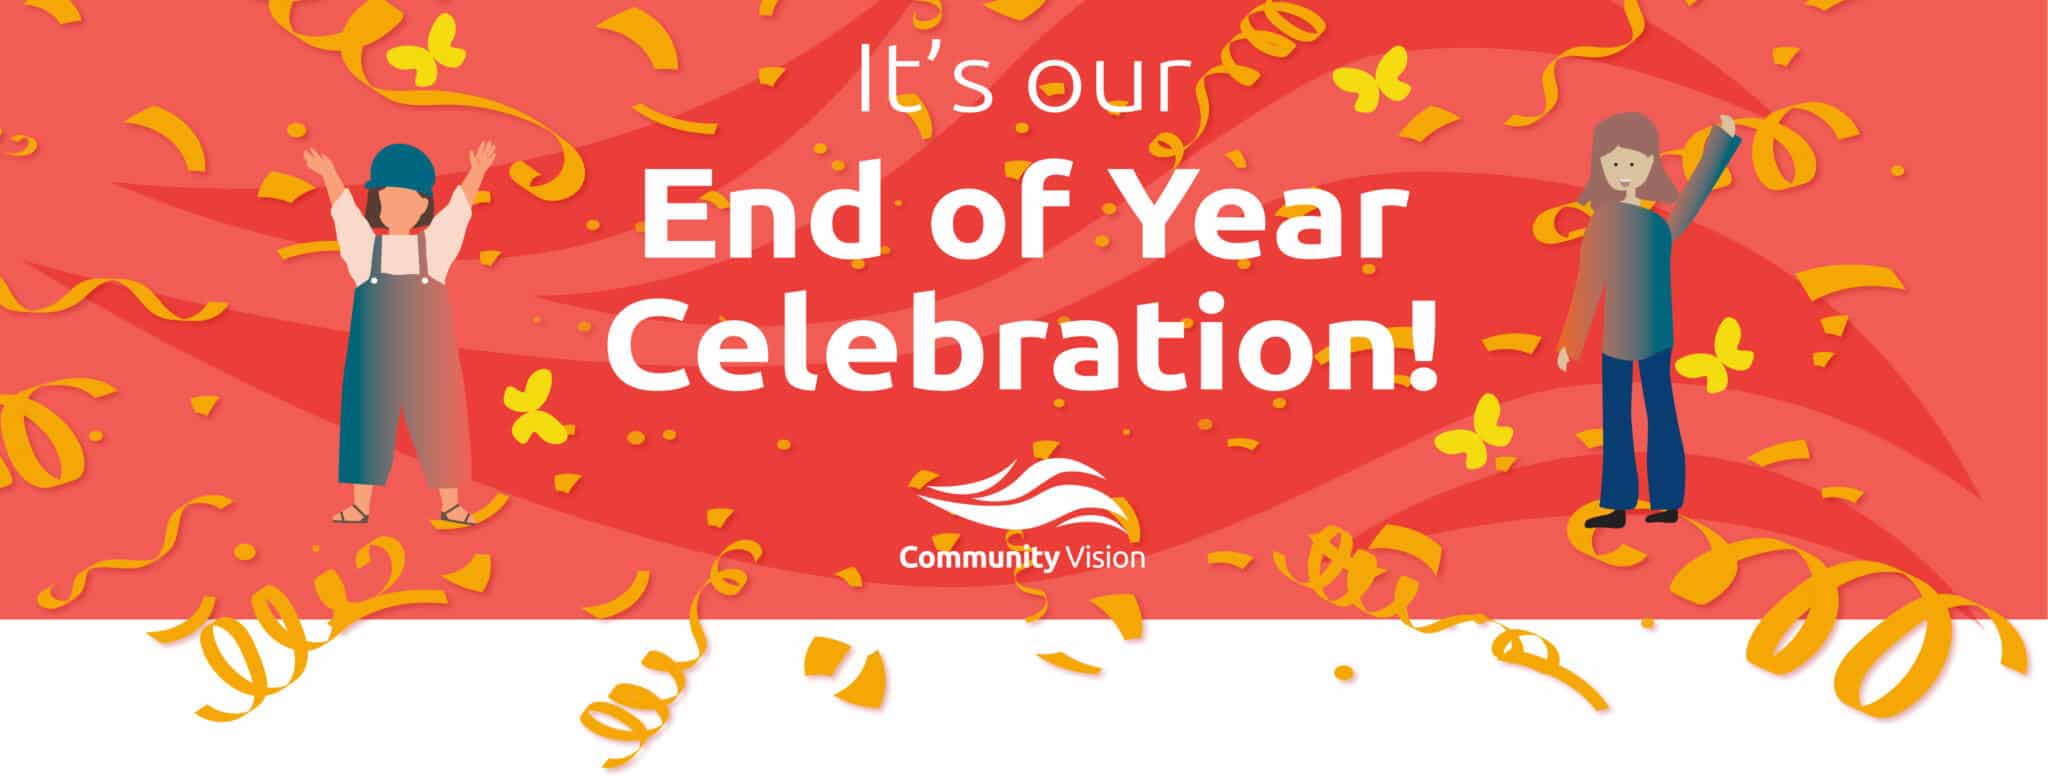 Community Vision End of Year Celebration Website Banner